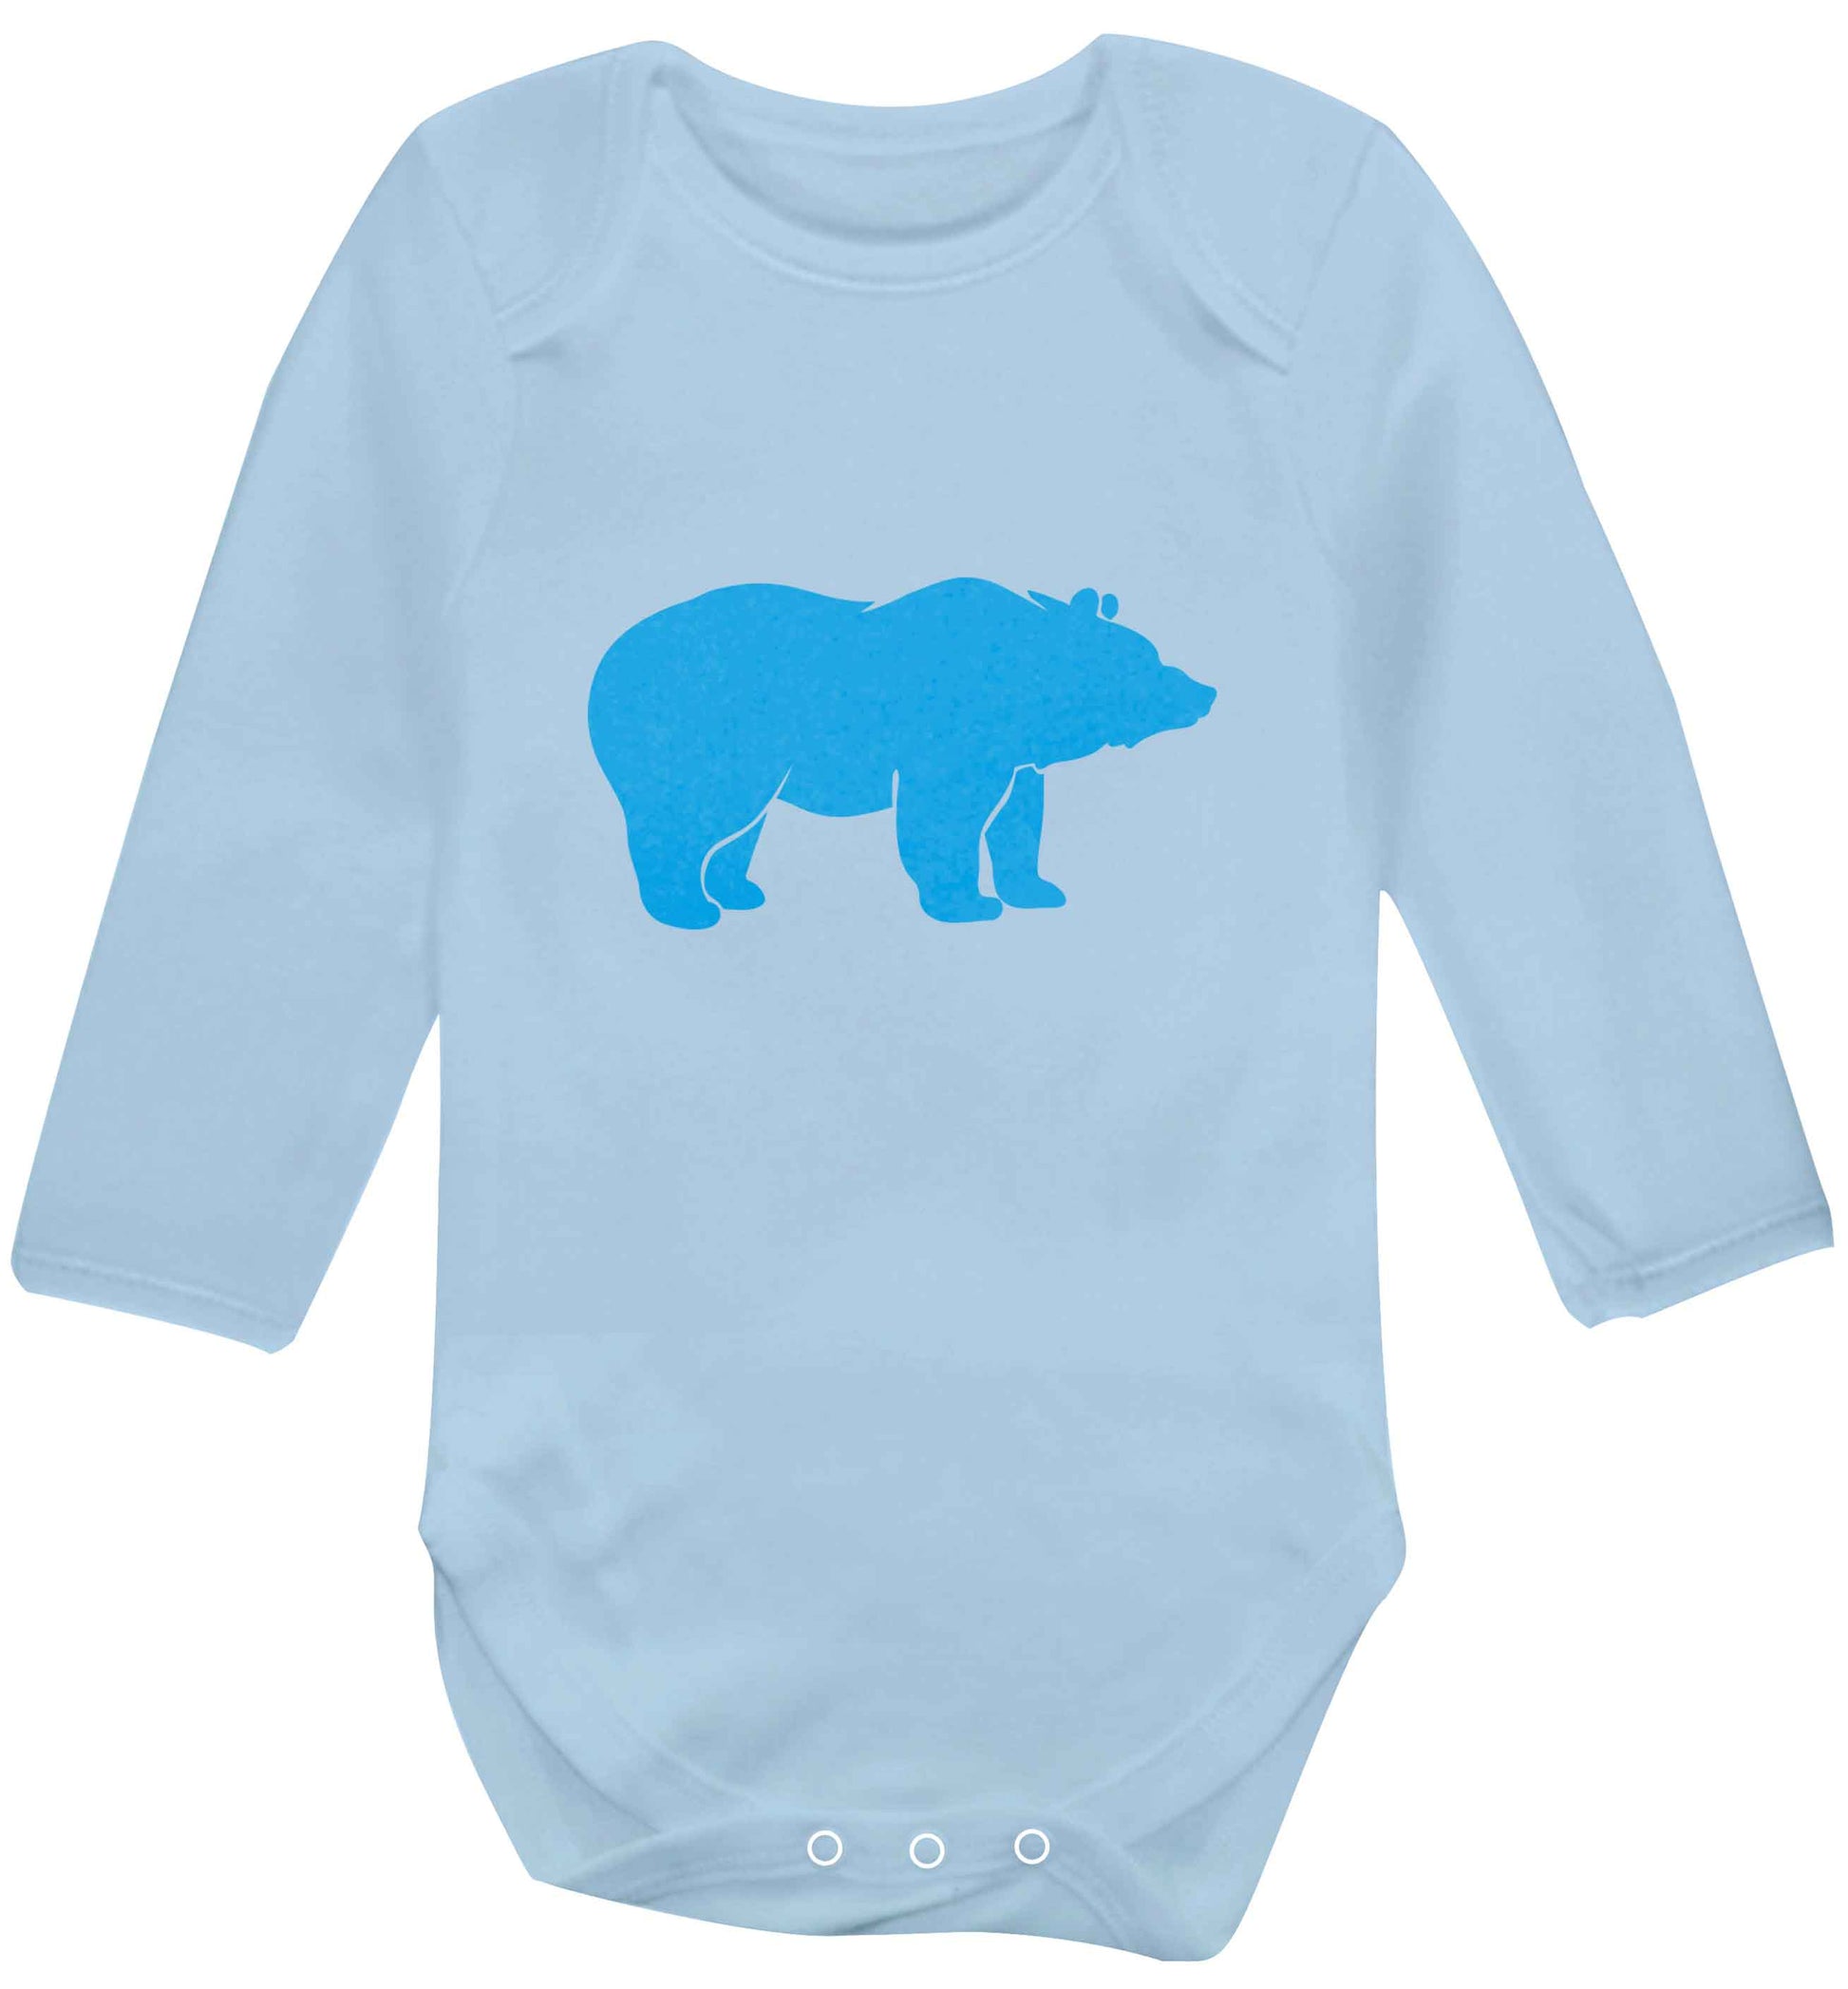 Blue bear baby vest long sleeved pale blue 6-12 months